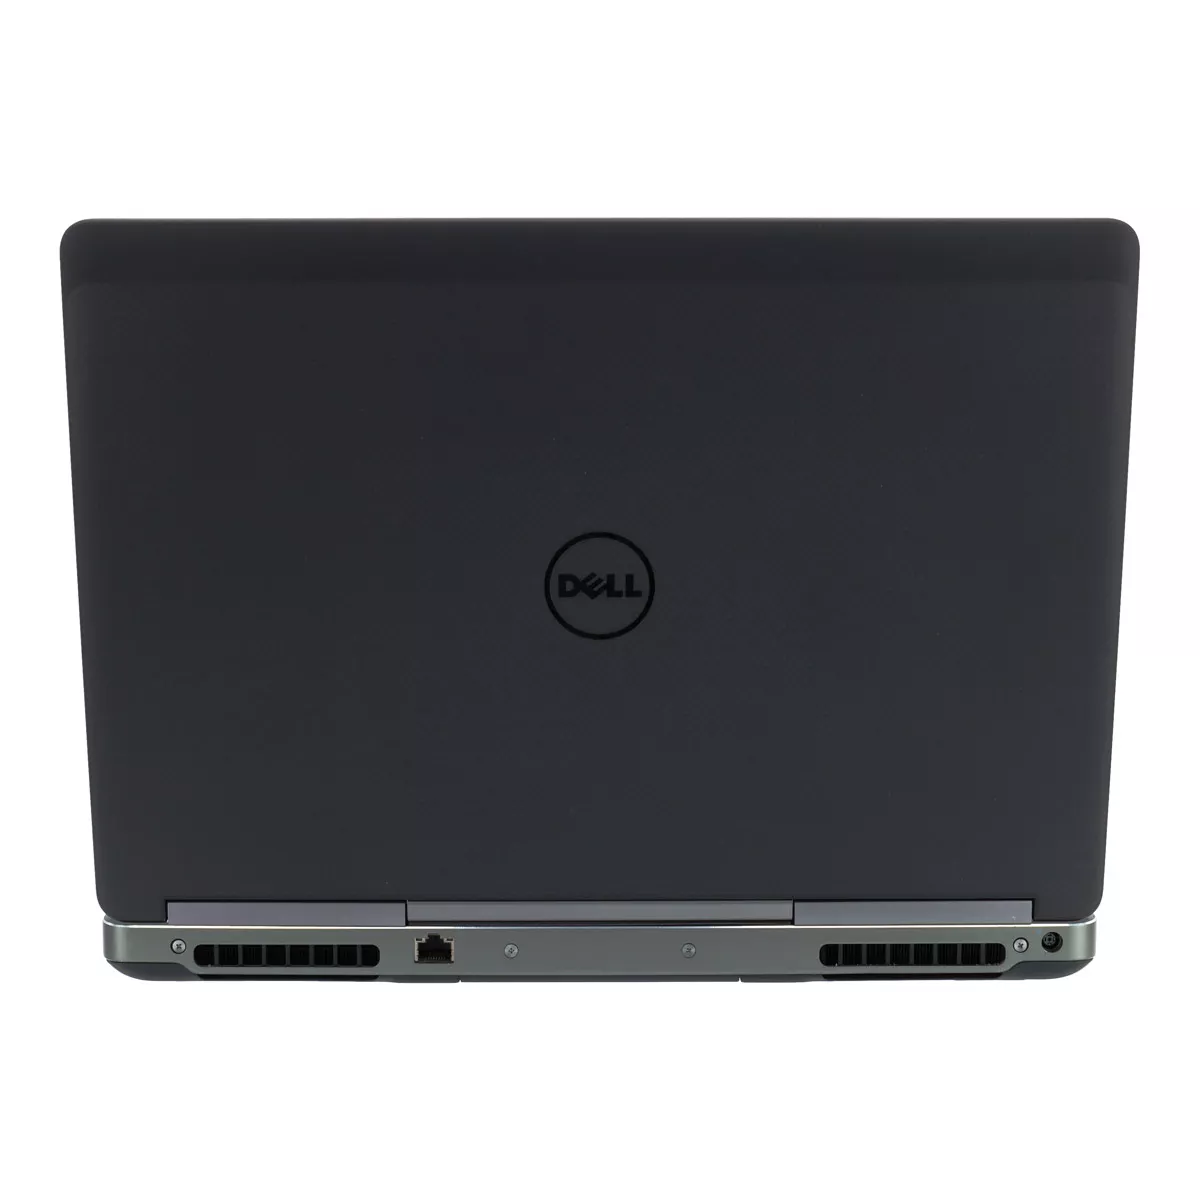 Dell Precision 7520 Core i7 6820HQ nVidia Quadro M1200M Full-HD 500 GB M.2 SSD Webcam B